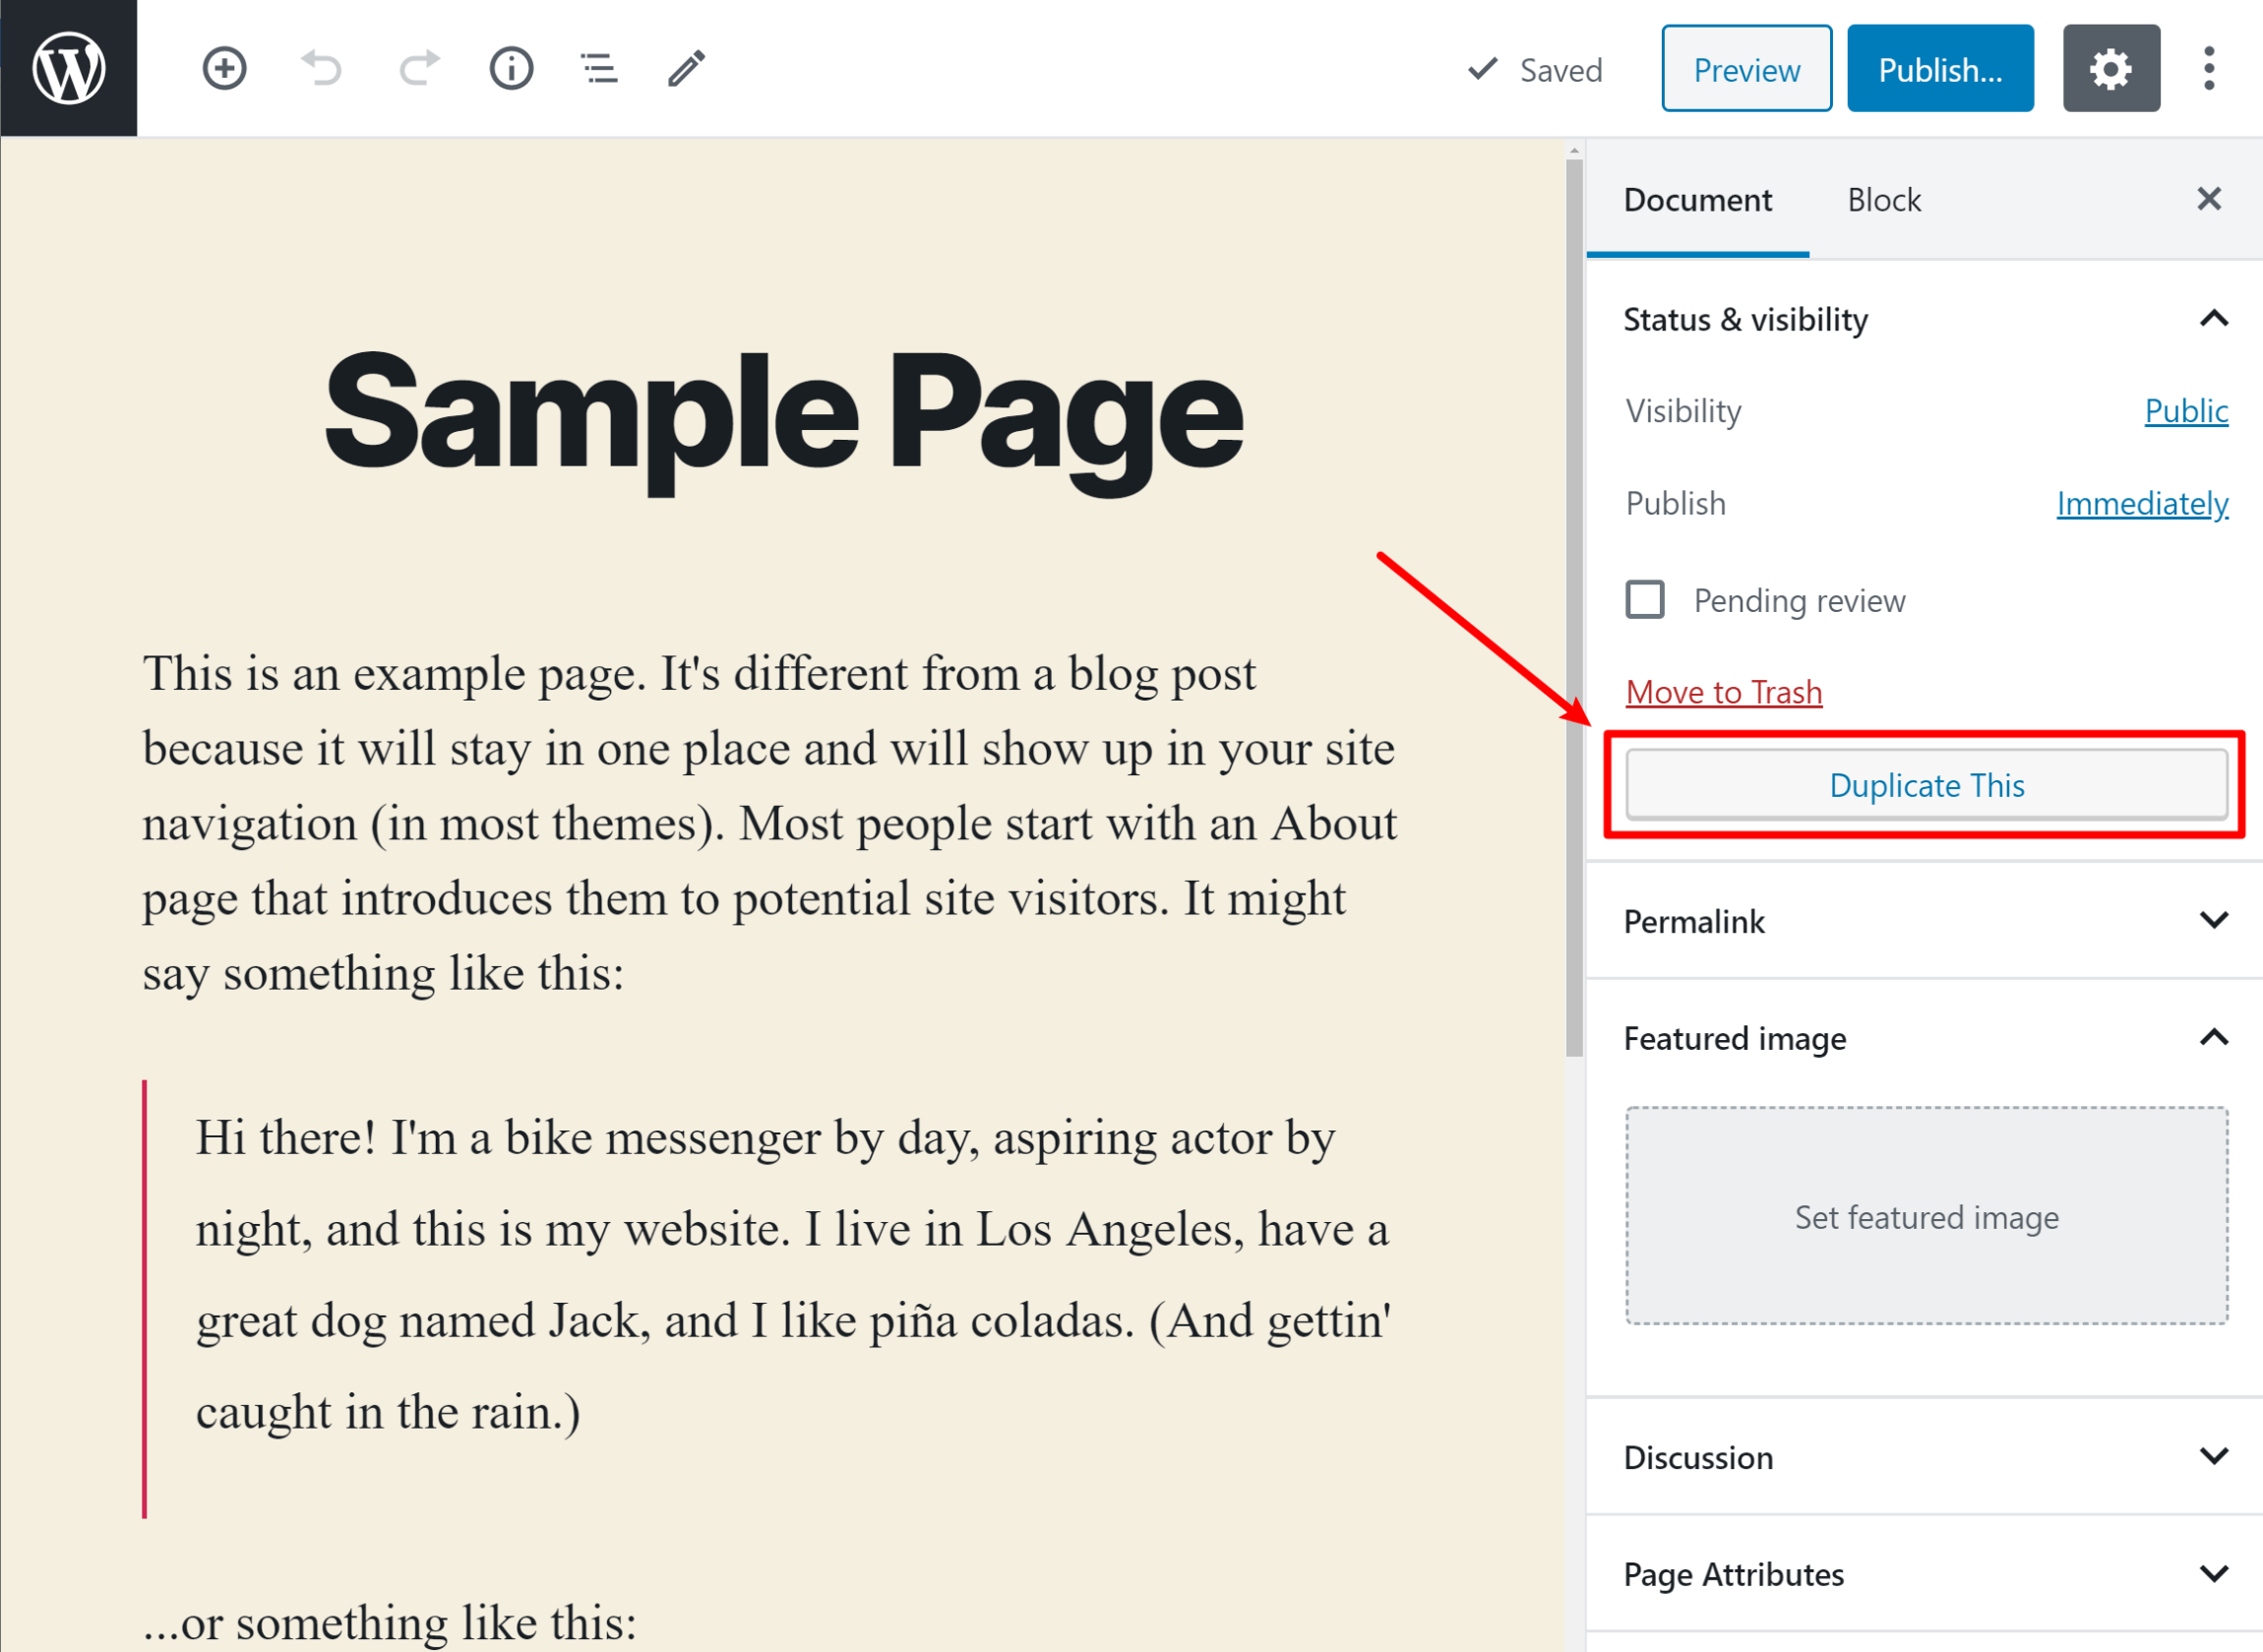 Duplicate This button in WordPress editor